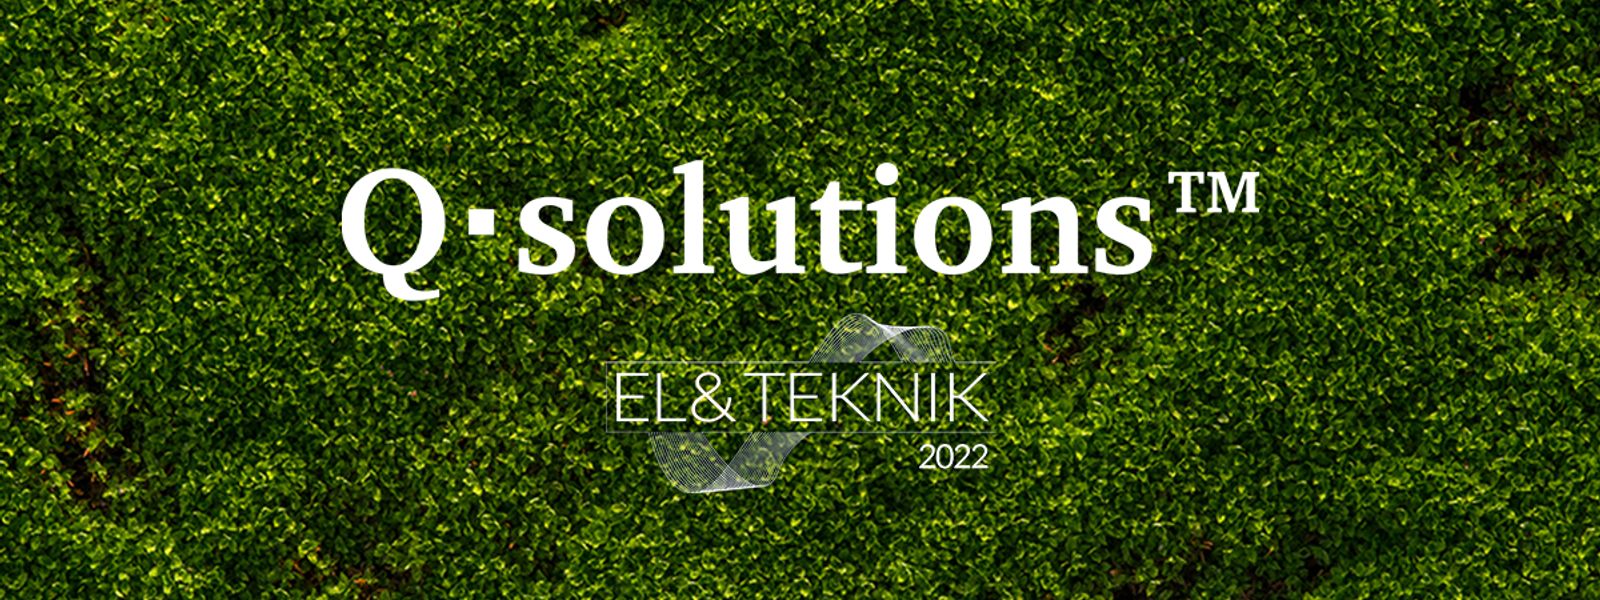 q solutions el & teknik 2022 green leaves background